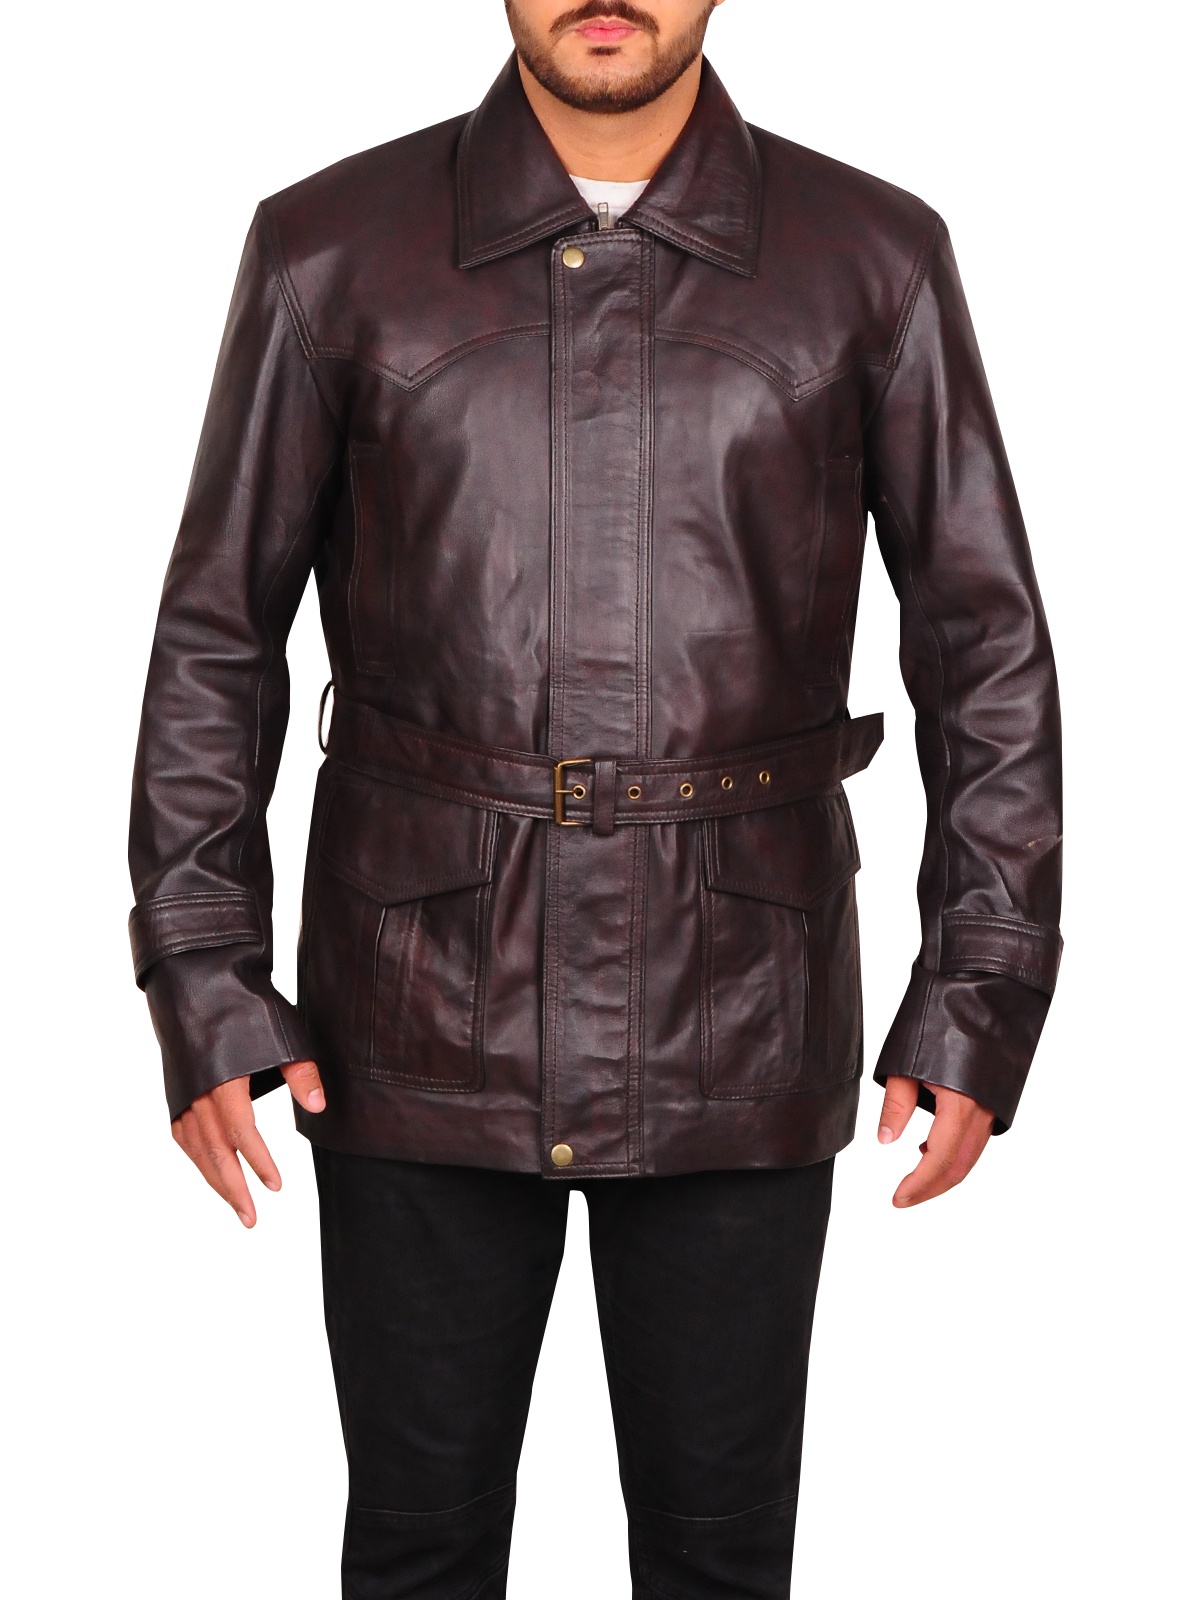 Tomorrow Never Dies Pierce Brosnan Leather Jacket - A2 Jackets